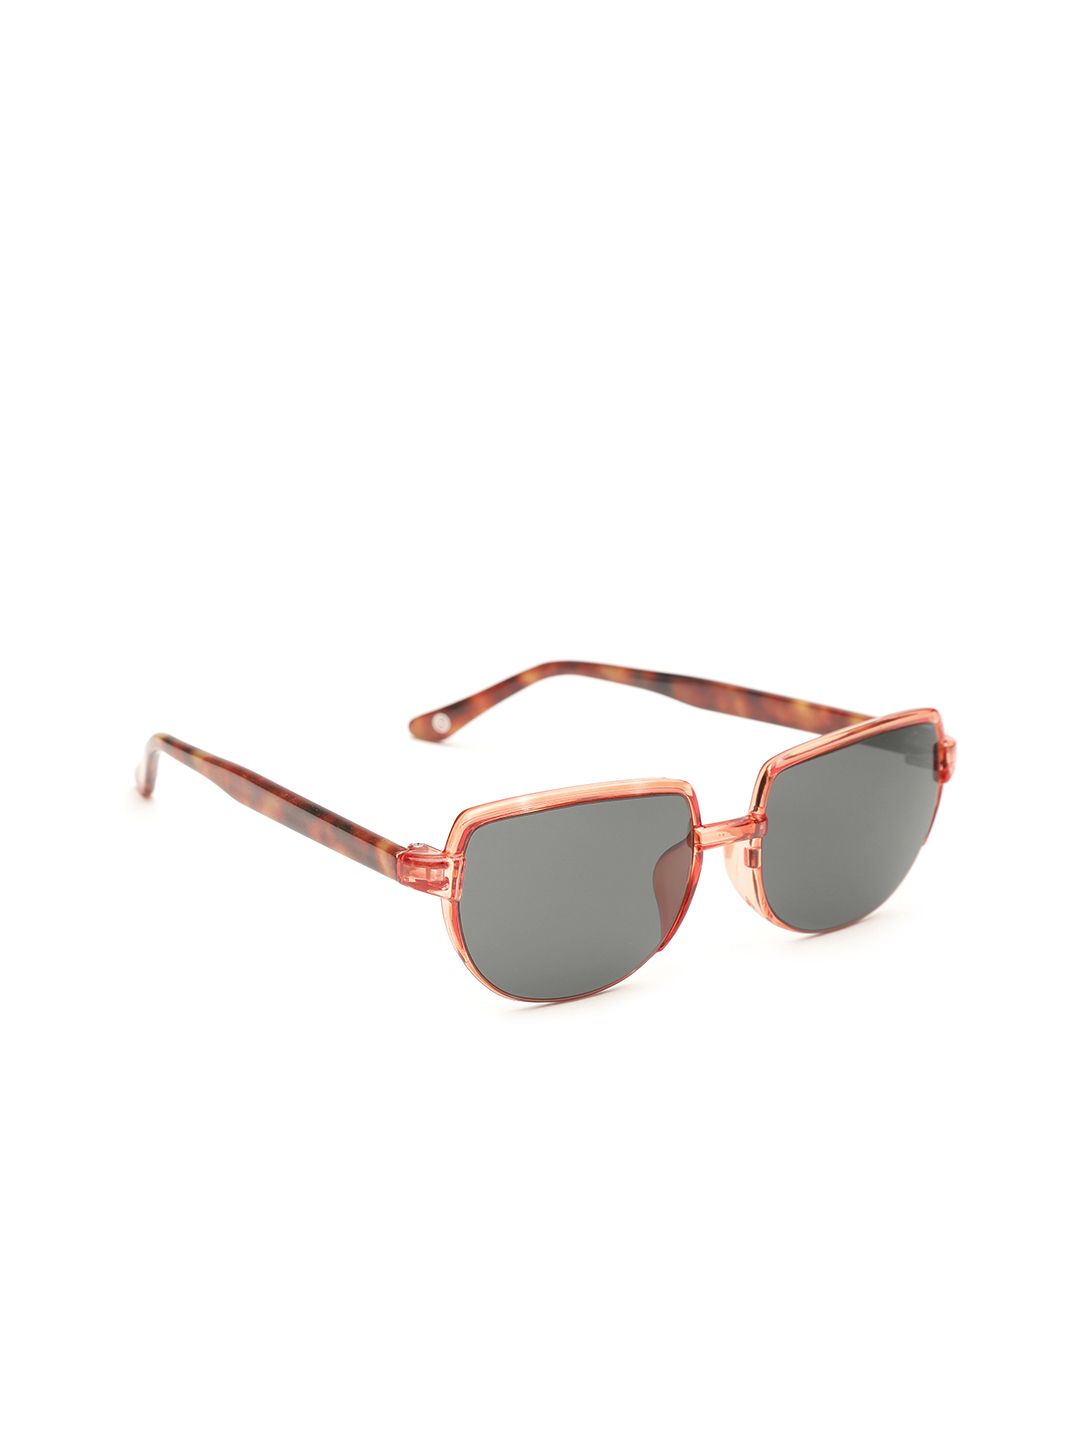 Carlton London Women Oval Sunglasses R6041 Price in India